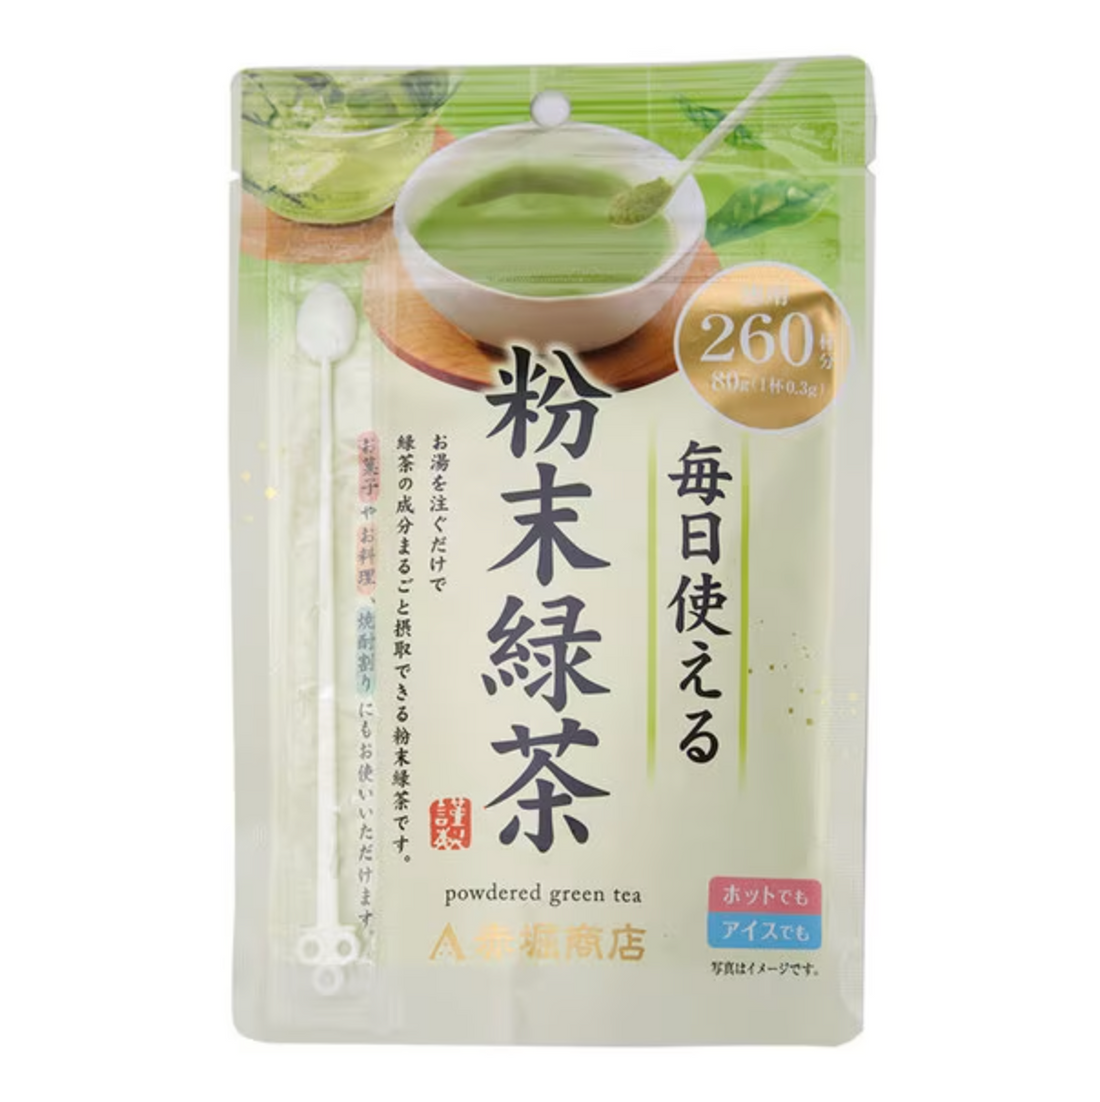 Akahori Shoten Powdered green tea for everyday use 80g